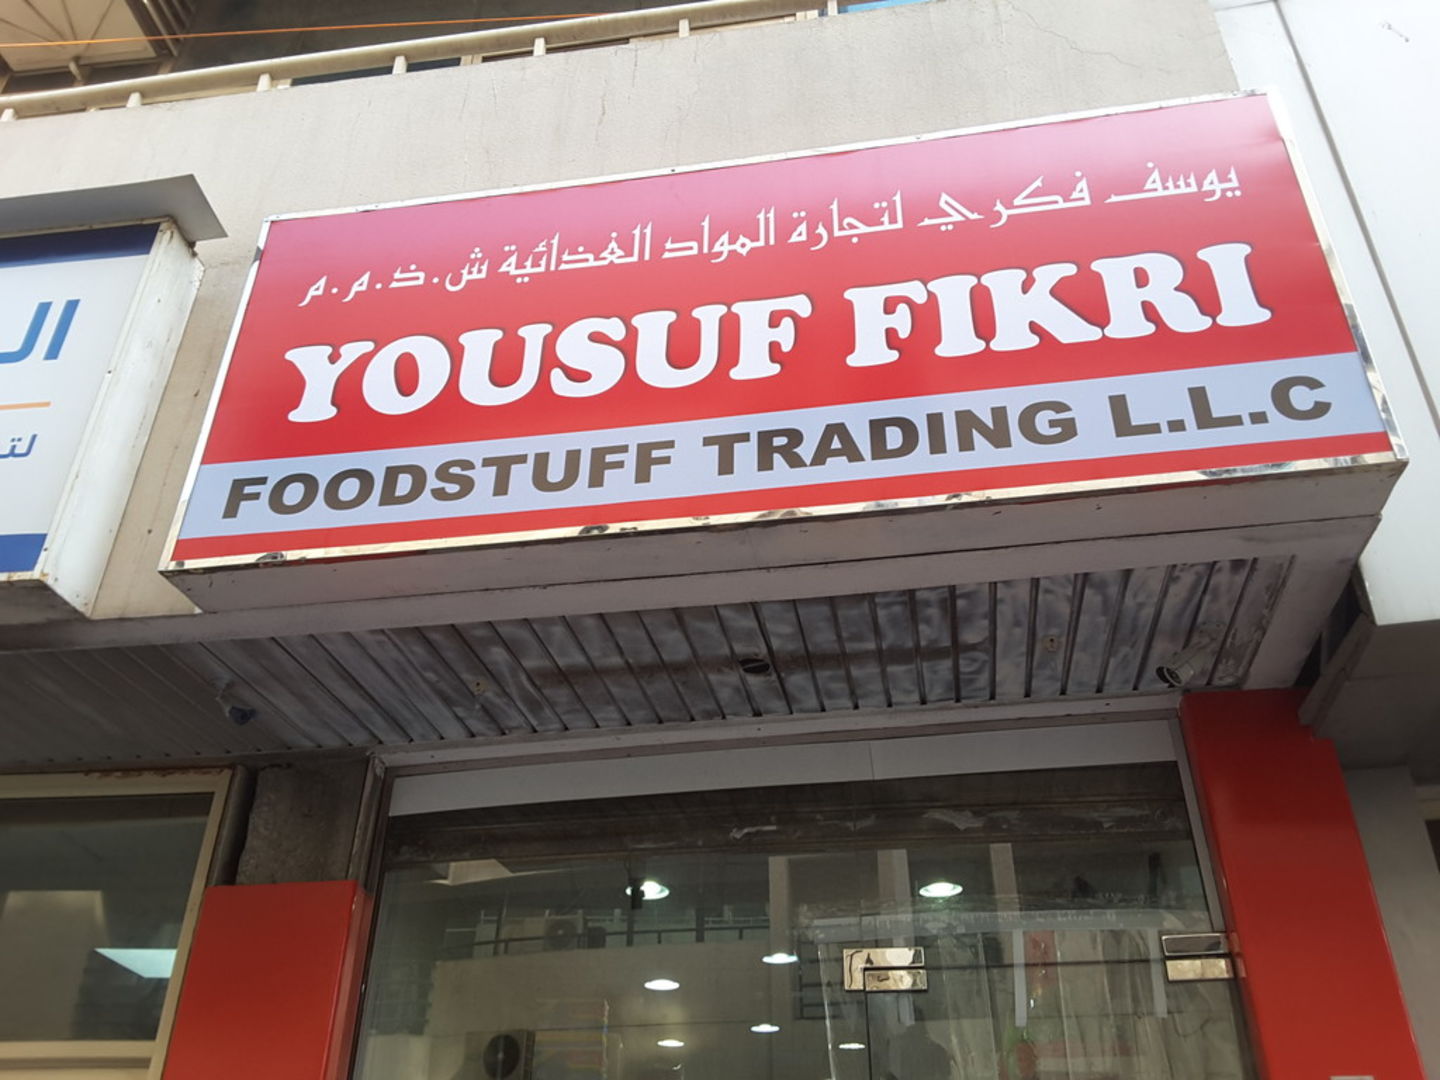 Yousuf Fikri Food Stuf Trading